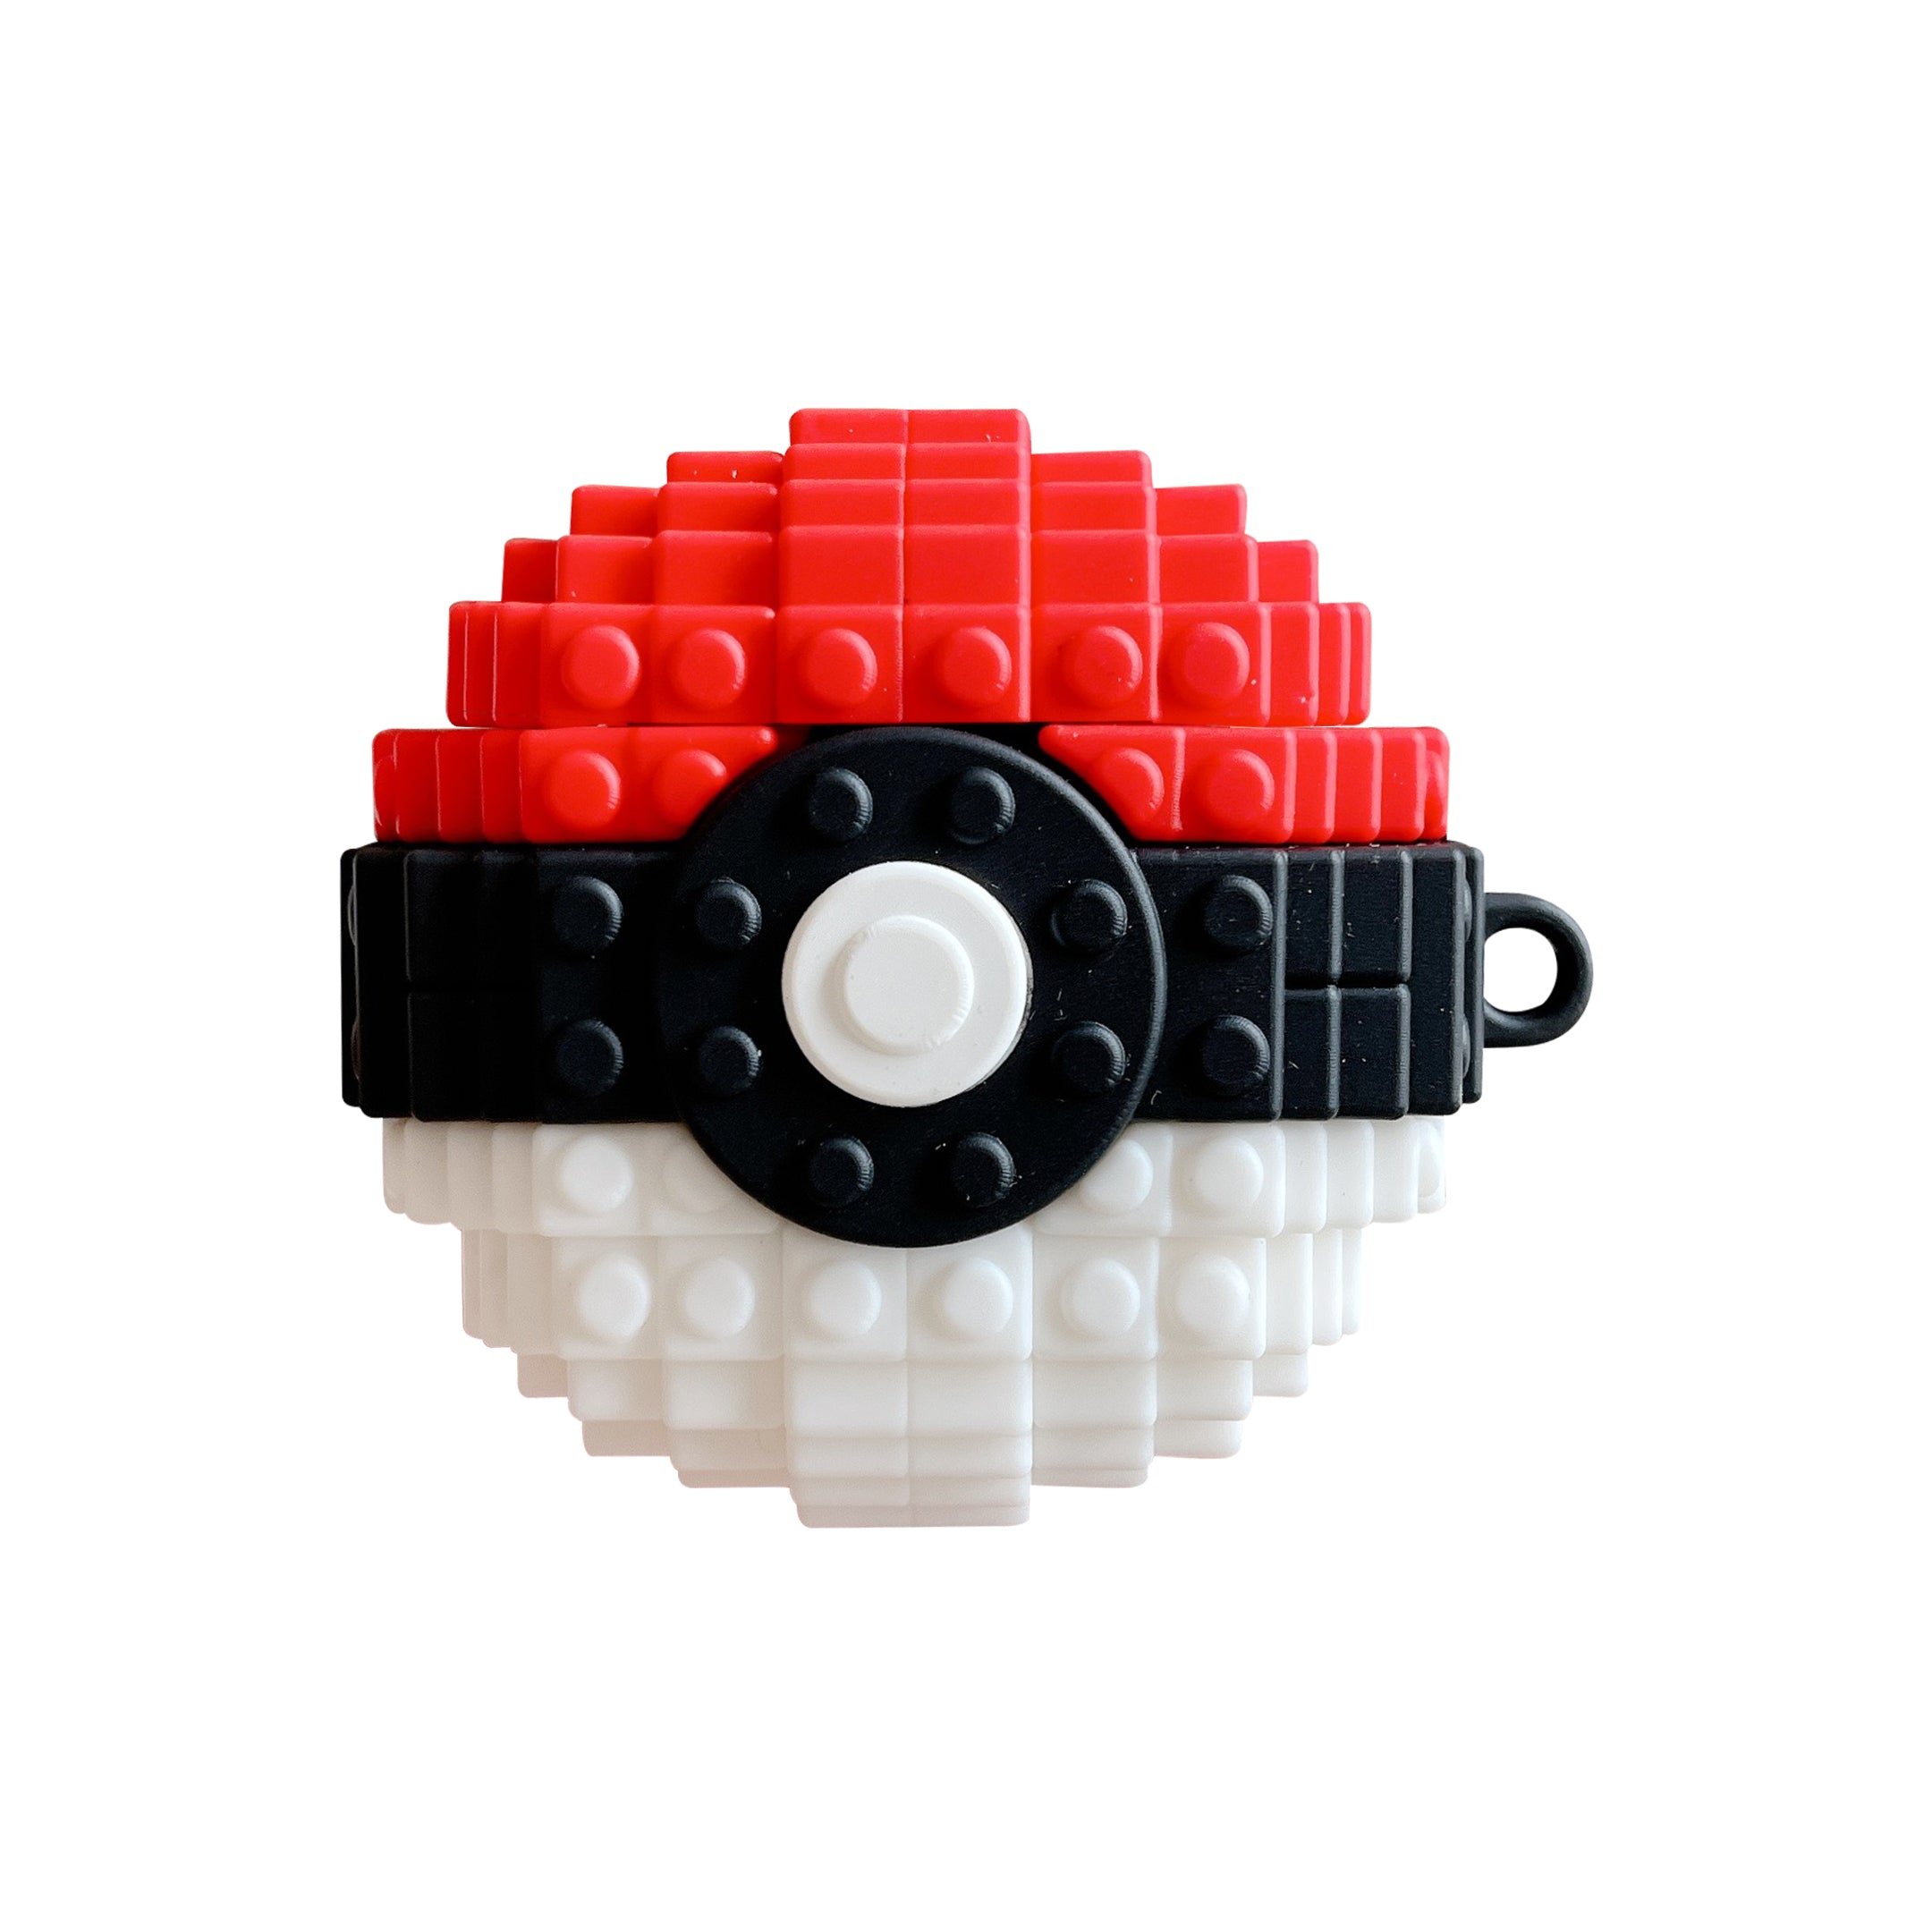 Pokeball Lego Blocks Pokemon Airpods Case